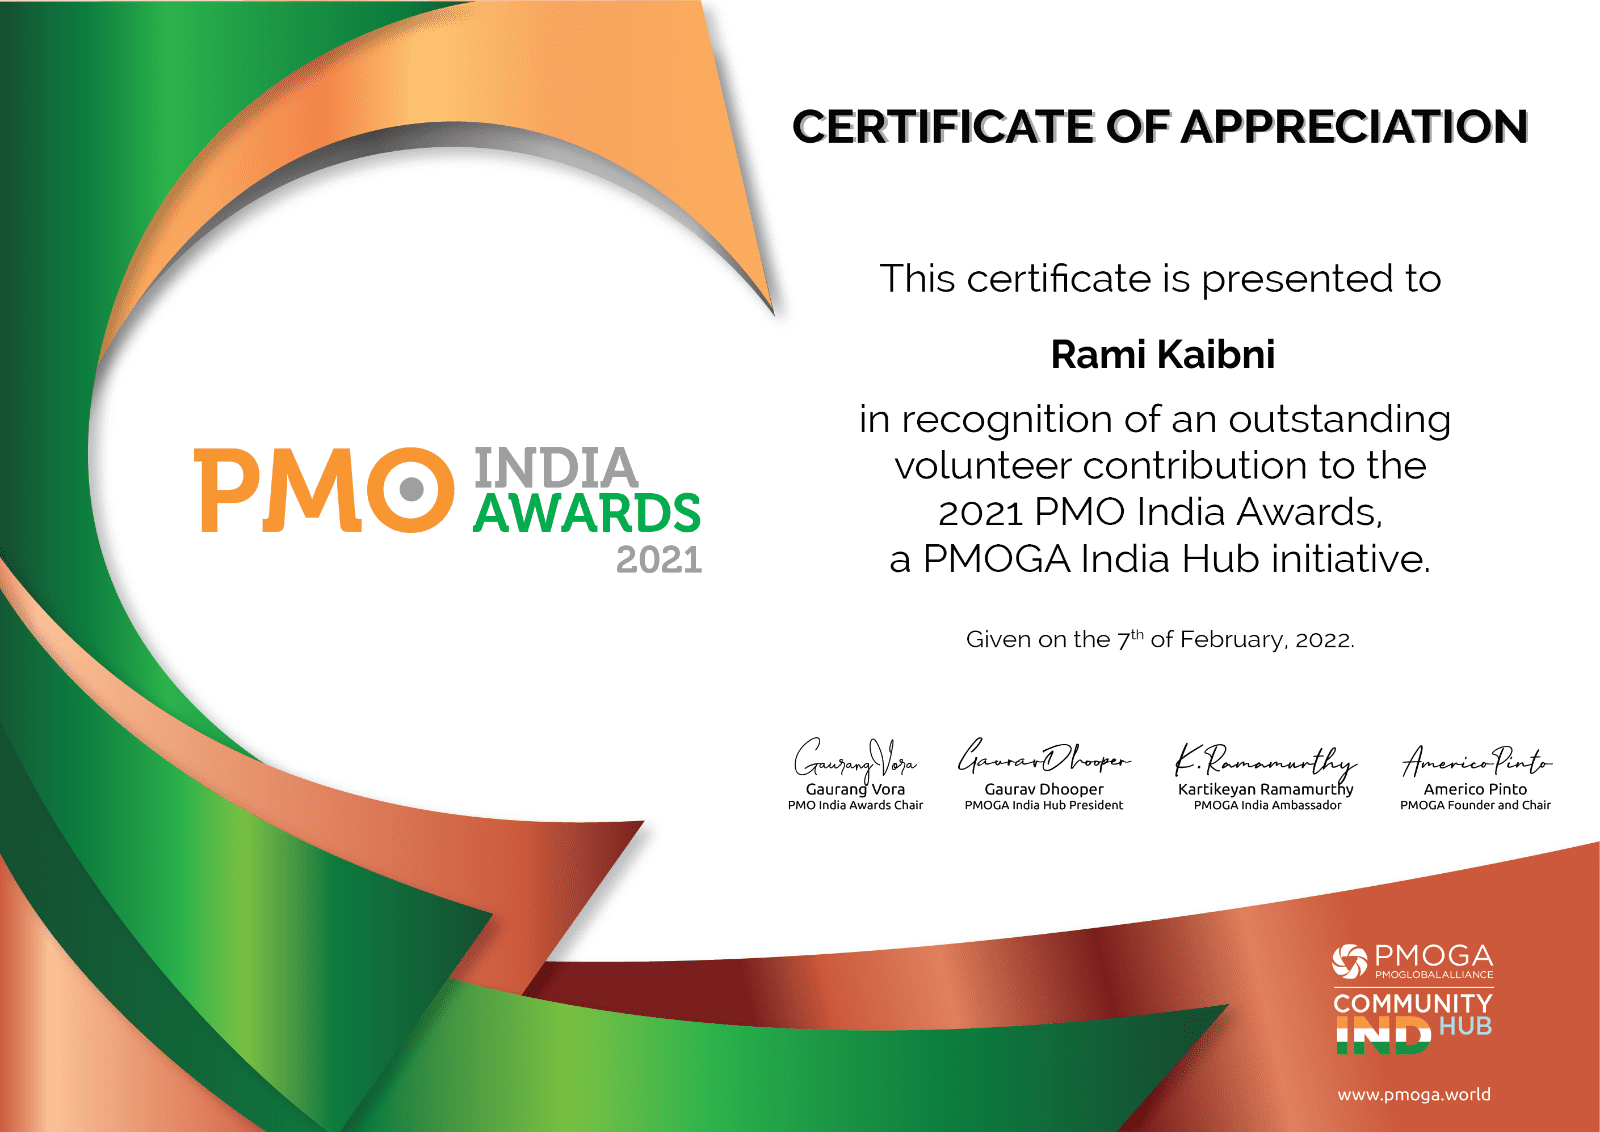 PMOGA India Hub Judge Certificate